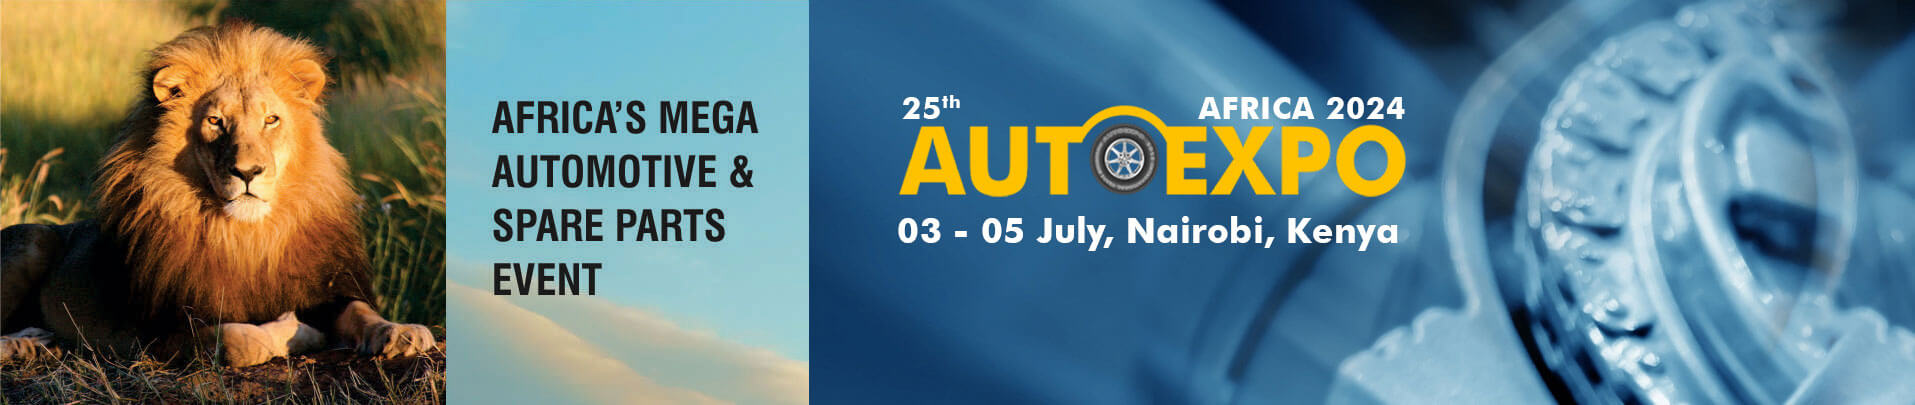 AUTOEXPO AFRICA'S MEGA AUTOMOTIVE & SPARE PARTS EVENT, 2024